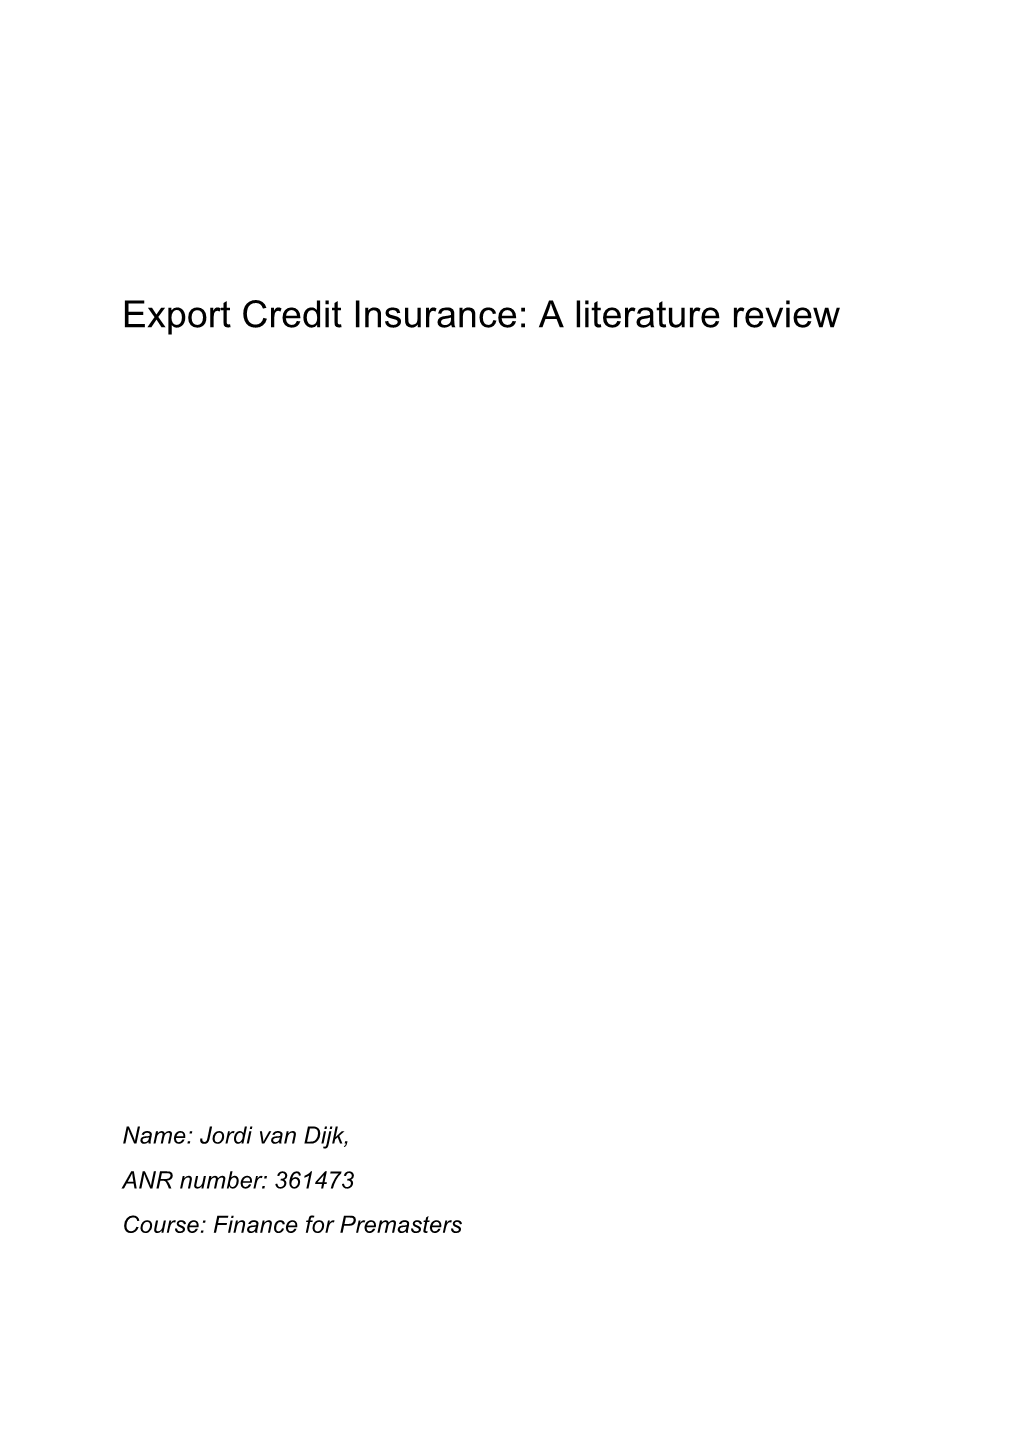 Export Credit Insurance: a Literature Review